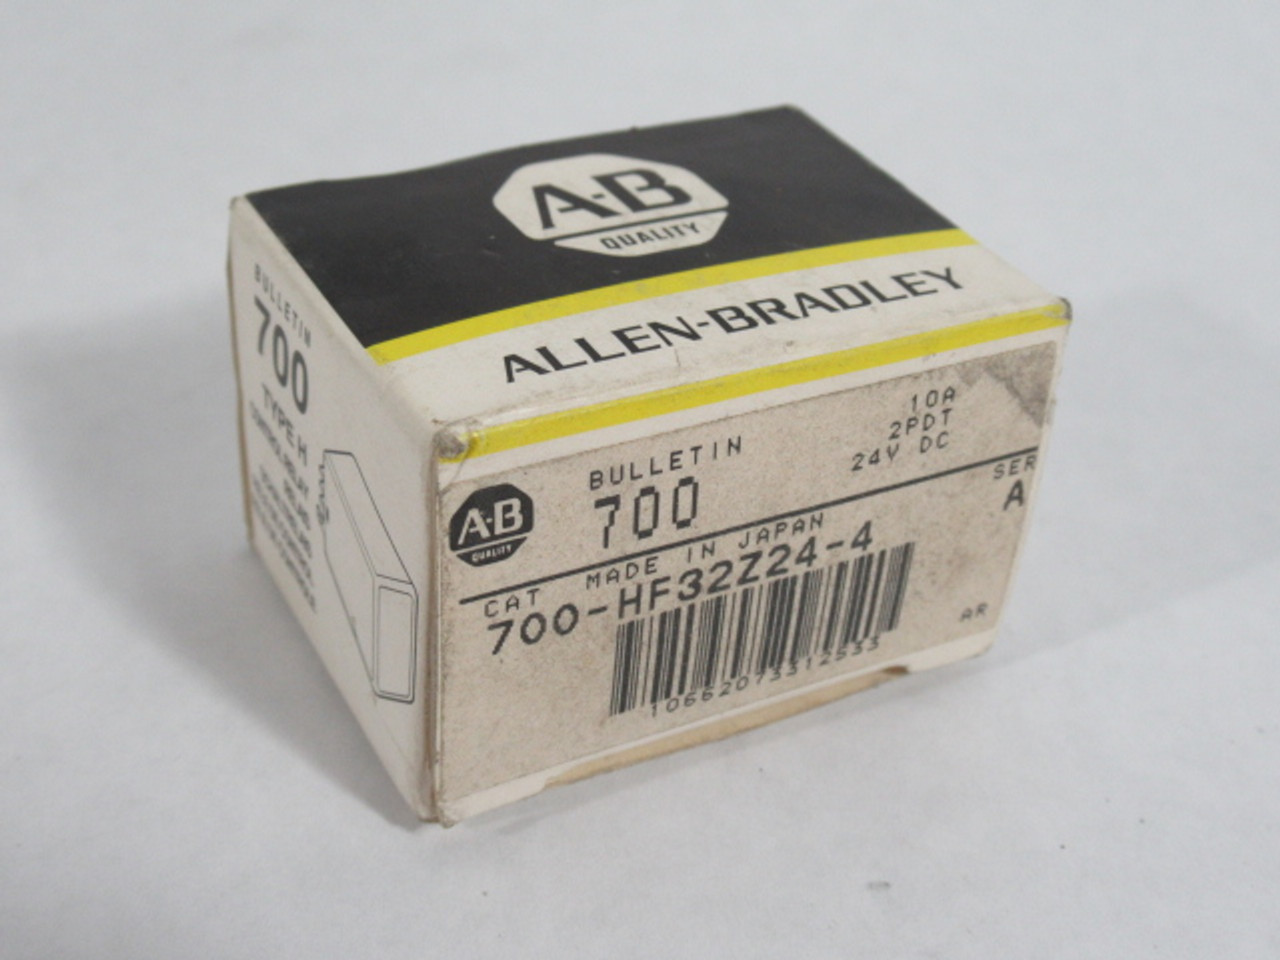 Allen-Bradley 700-HF32Z24-4 Control Relay SER A 24VDC 10A ! NEW !